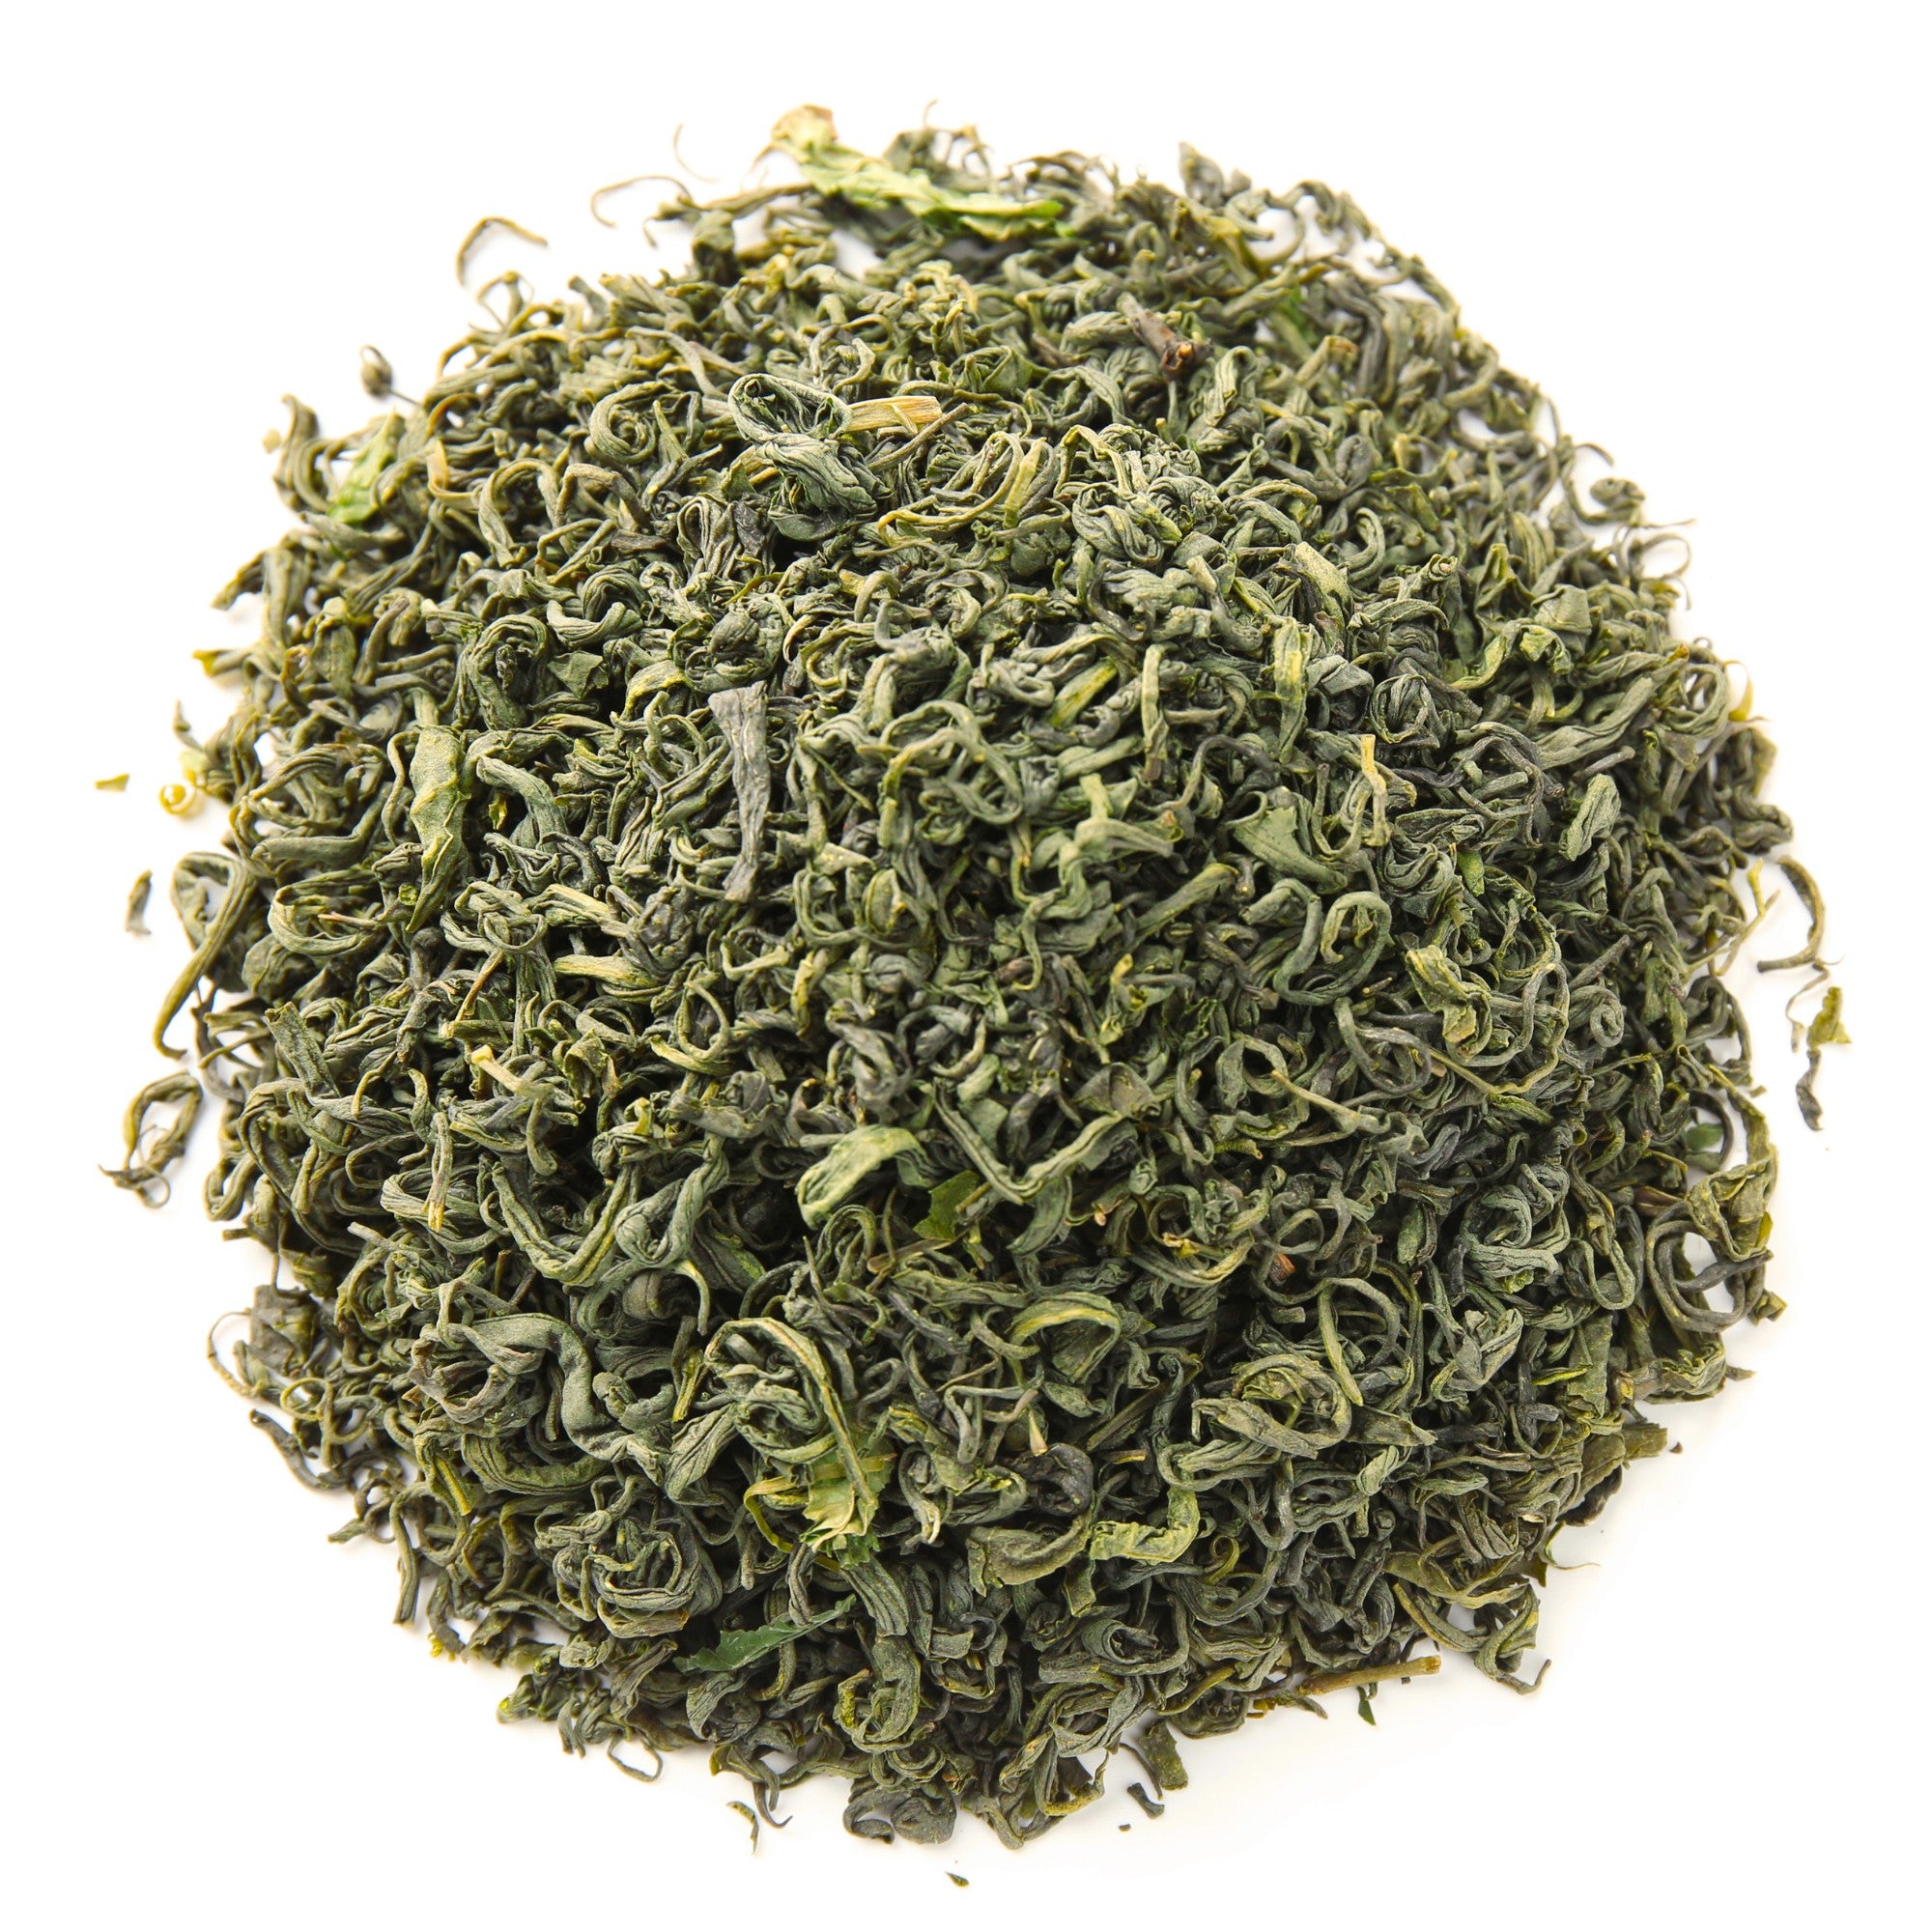 JustFreshRoasted 200g pack of Green Loose Leaf Tea